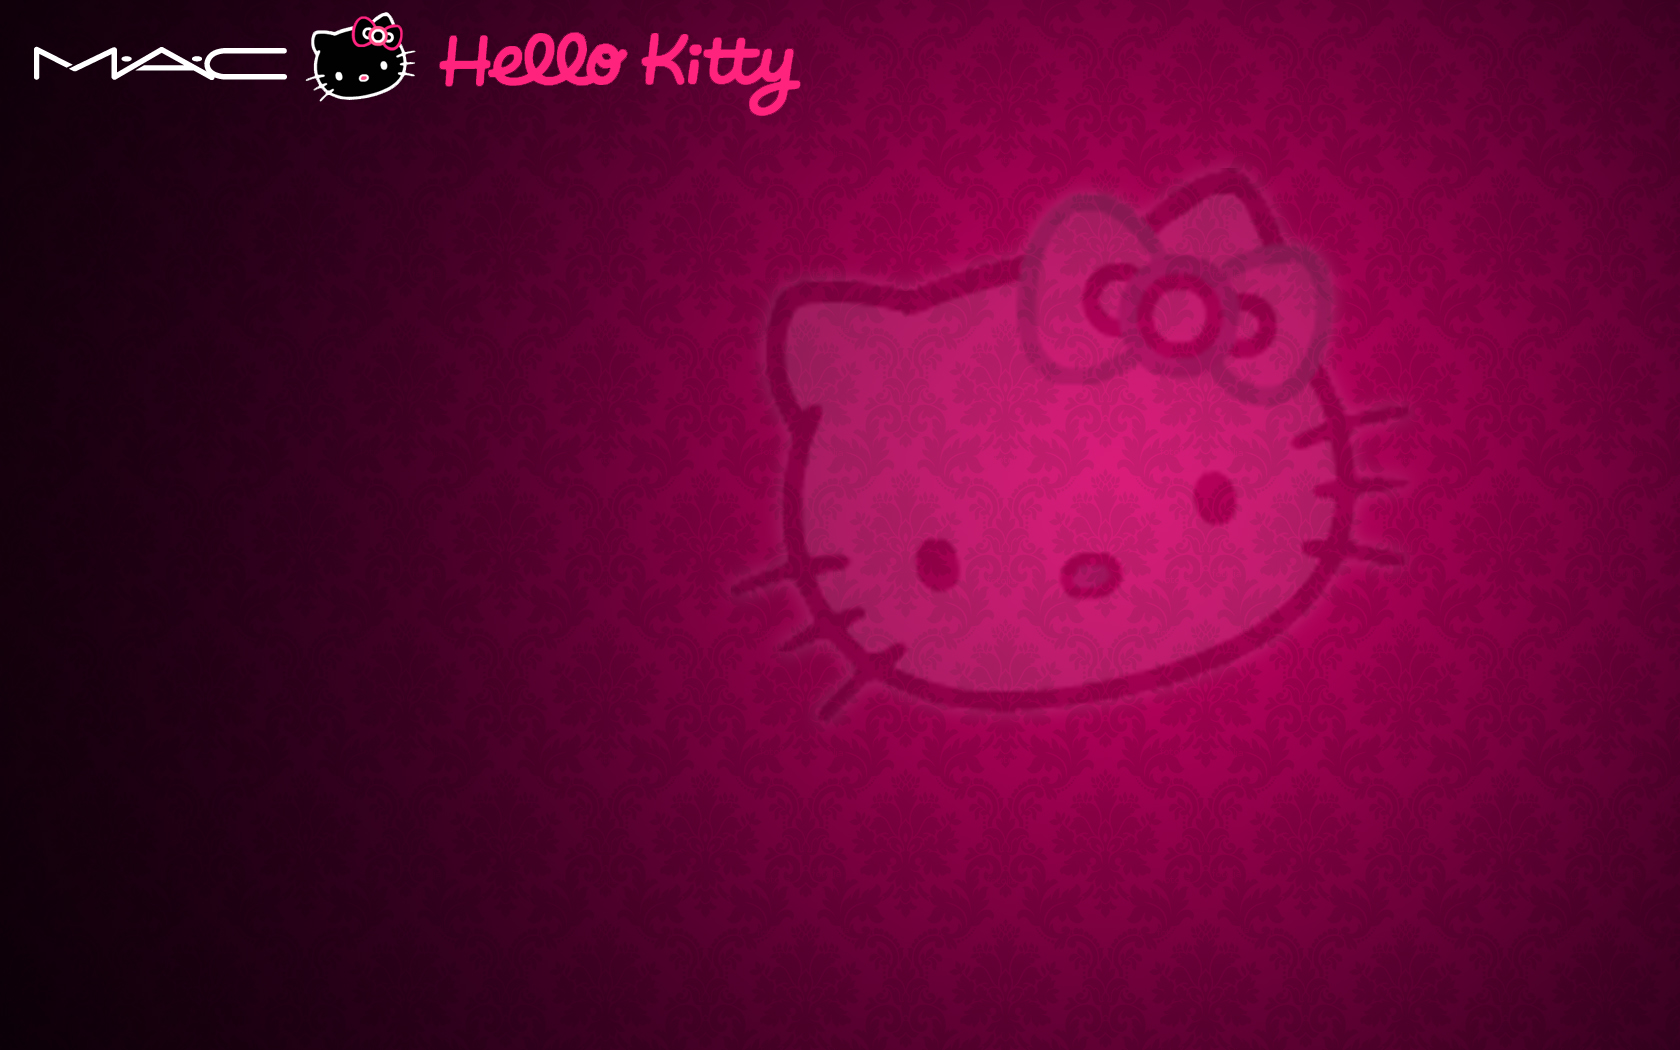 Mac Hello Kitty Wallpaper HD